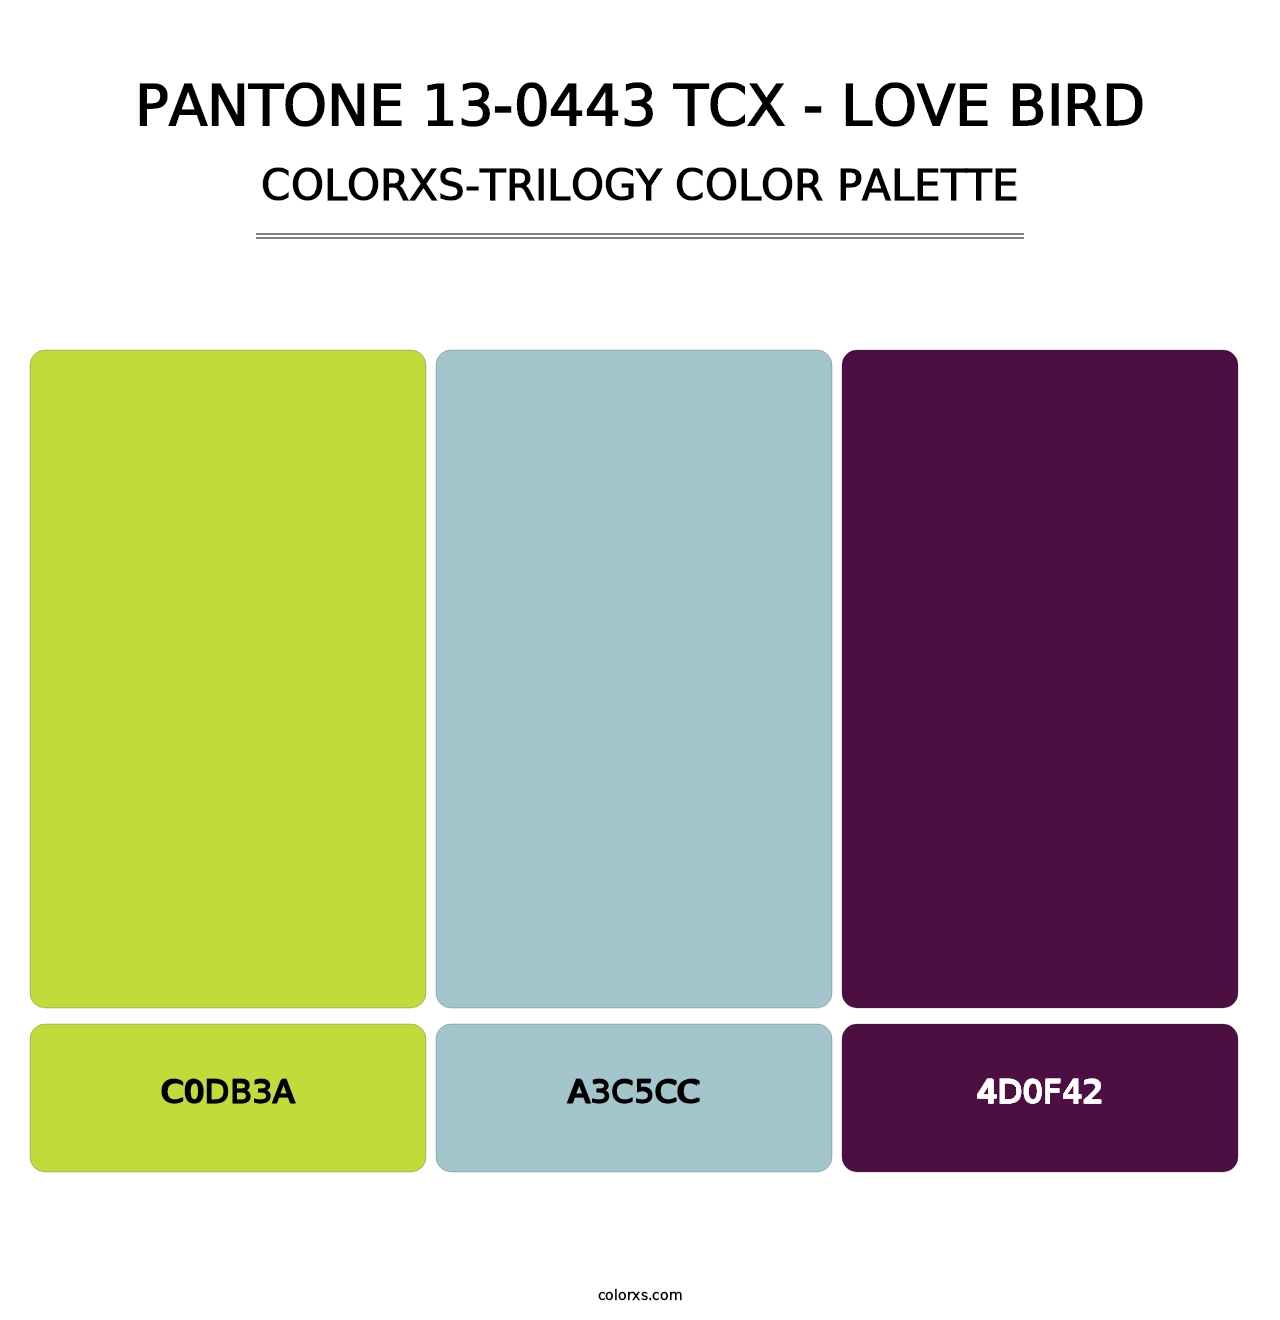 PANTONE 13-0443 TCX - Love Bird - Colorxs Trilogy Palette